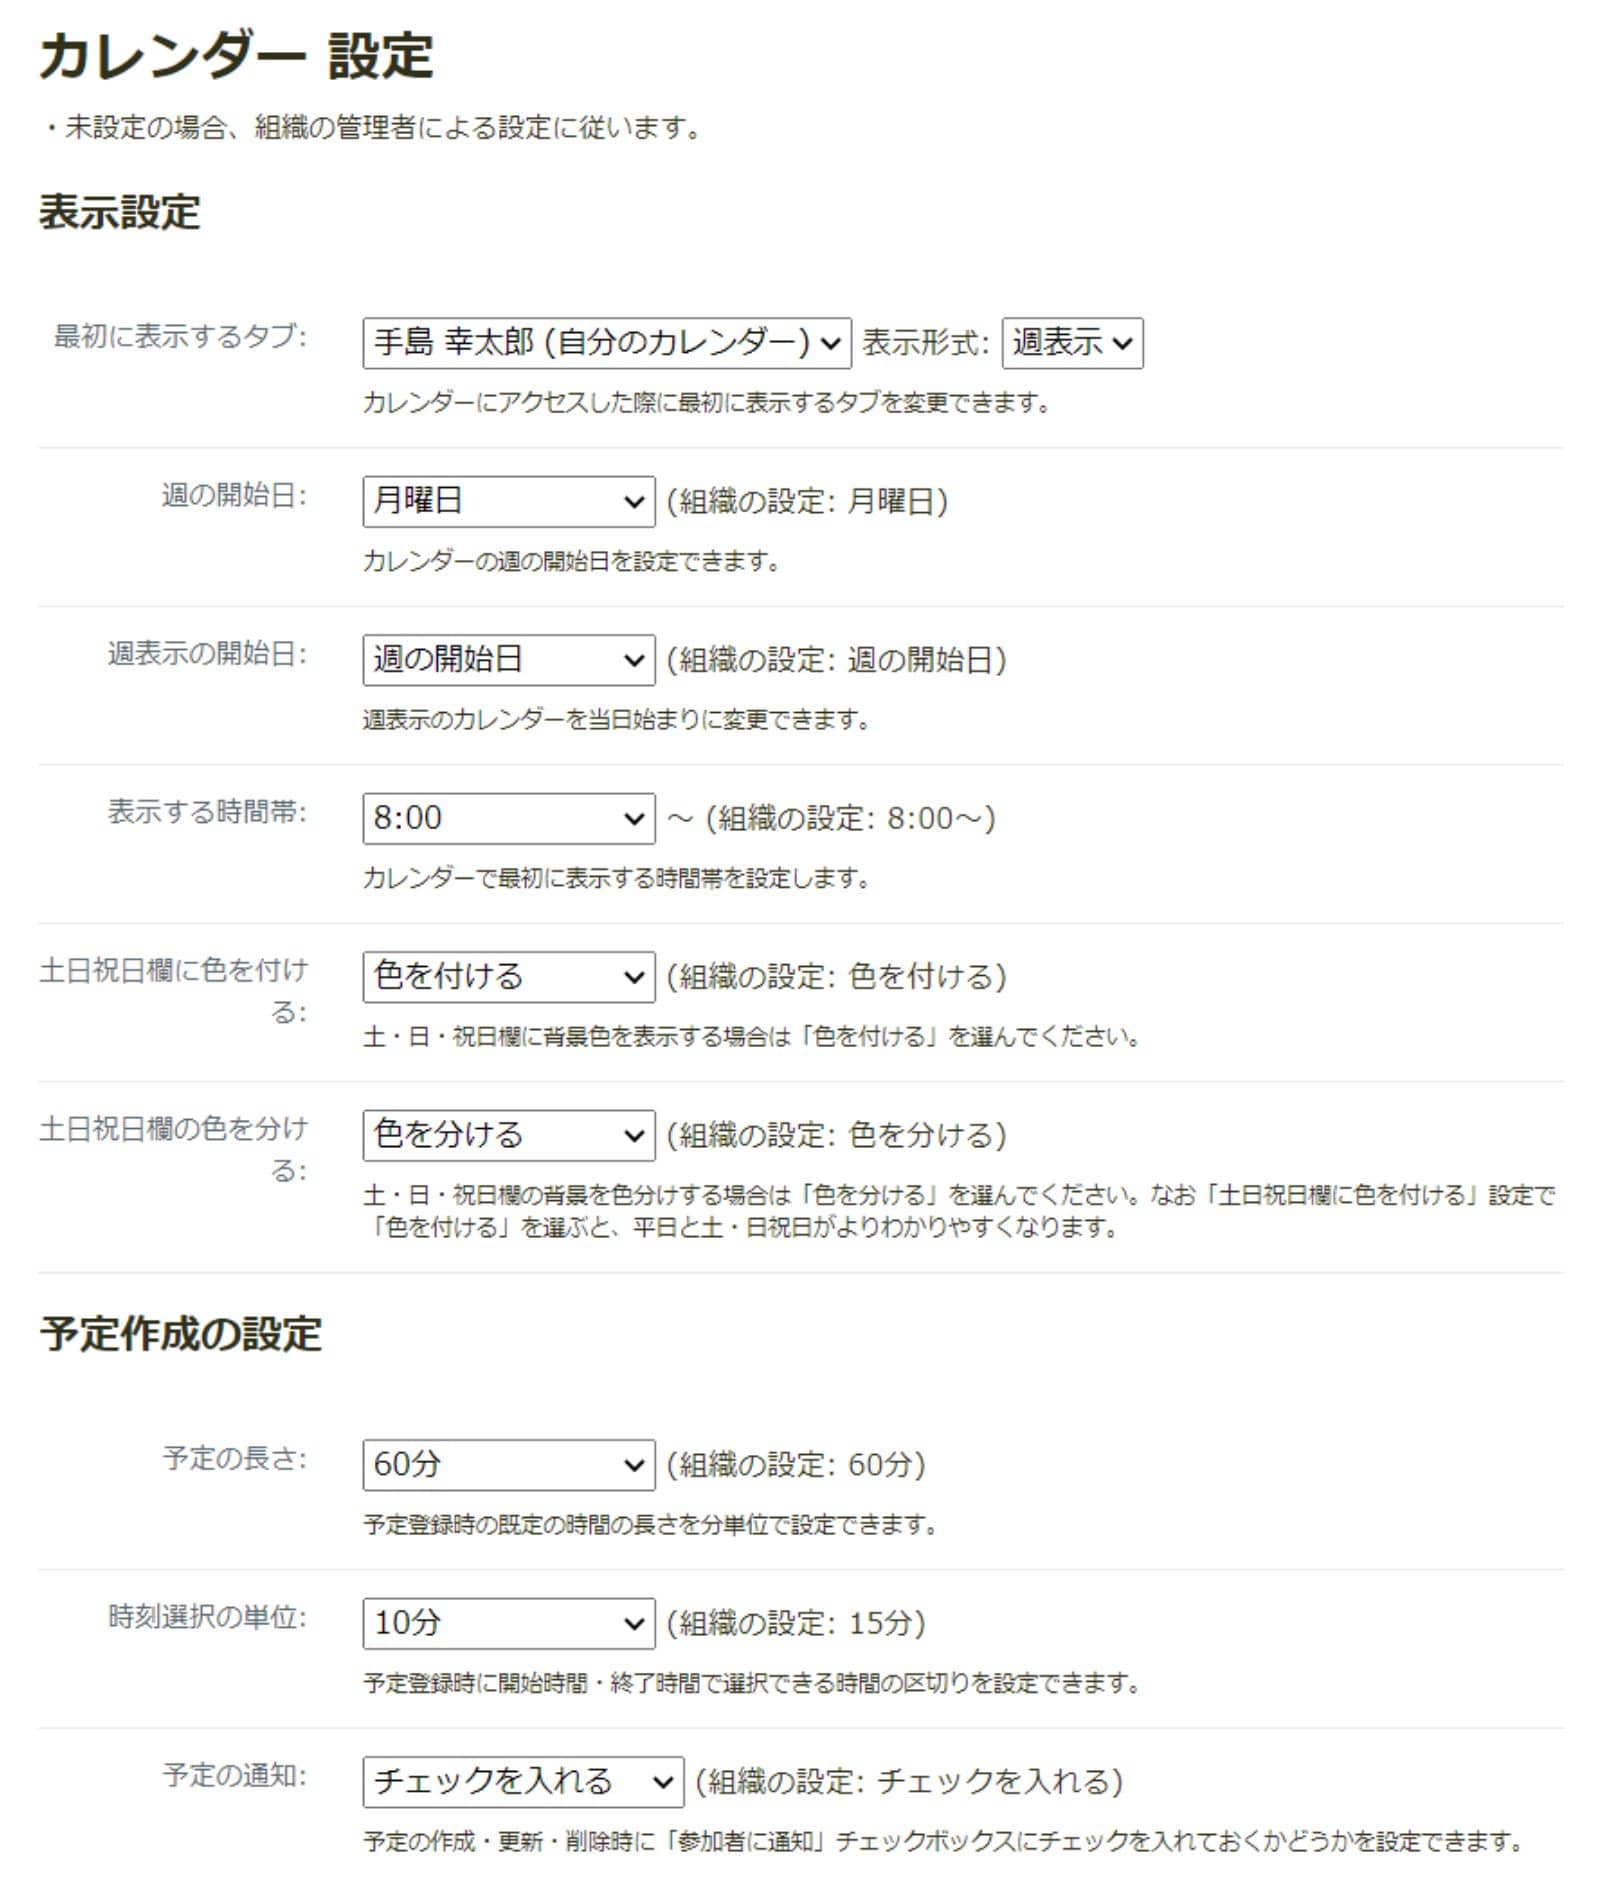 rakumo カレンダー 個人のカレンダー設定画面